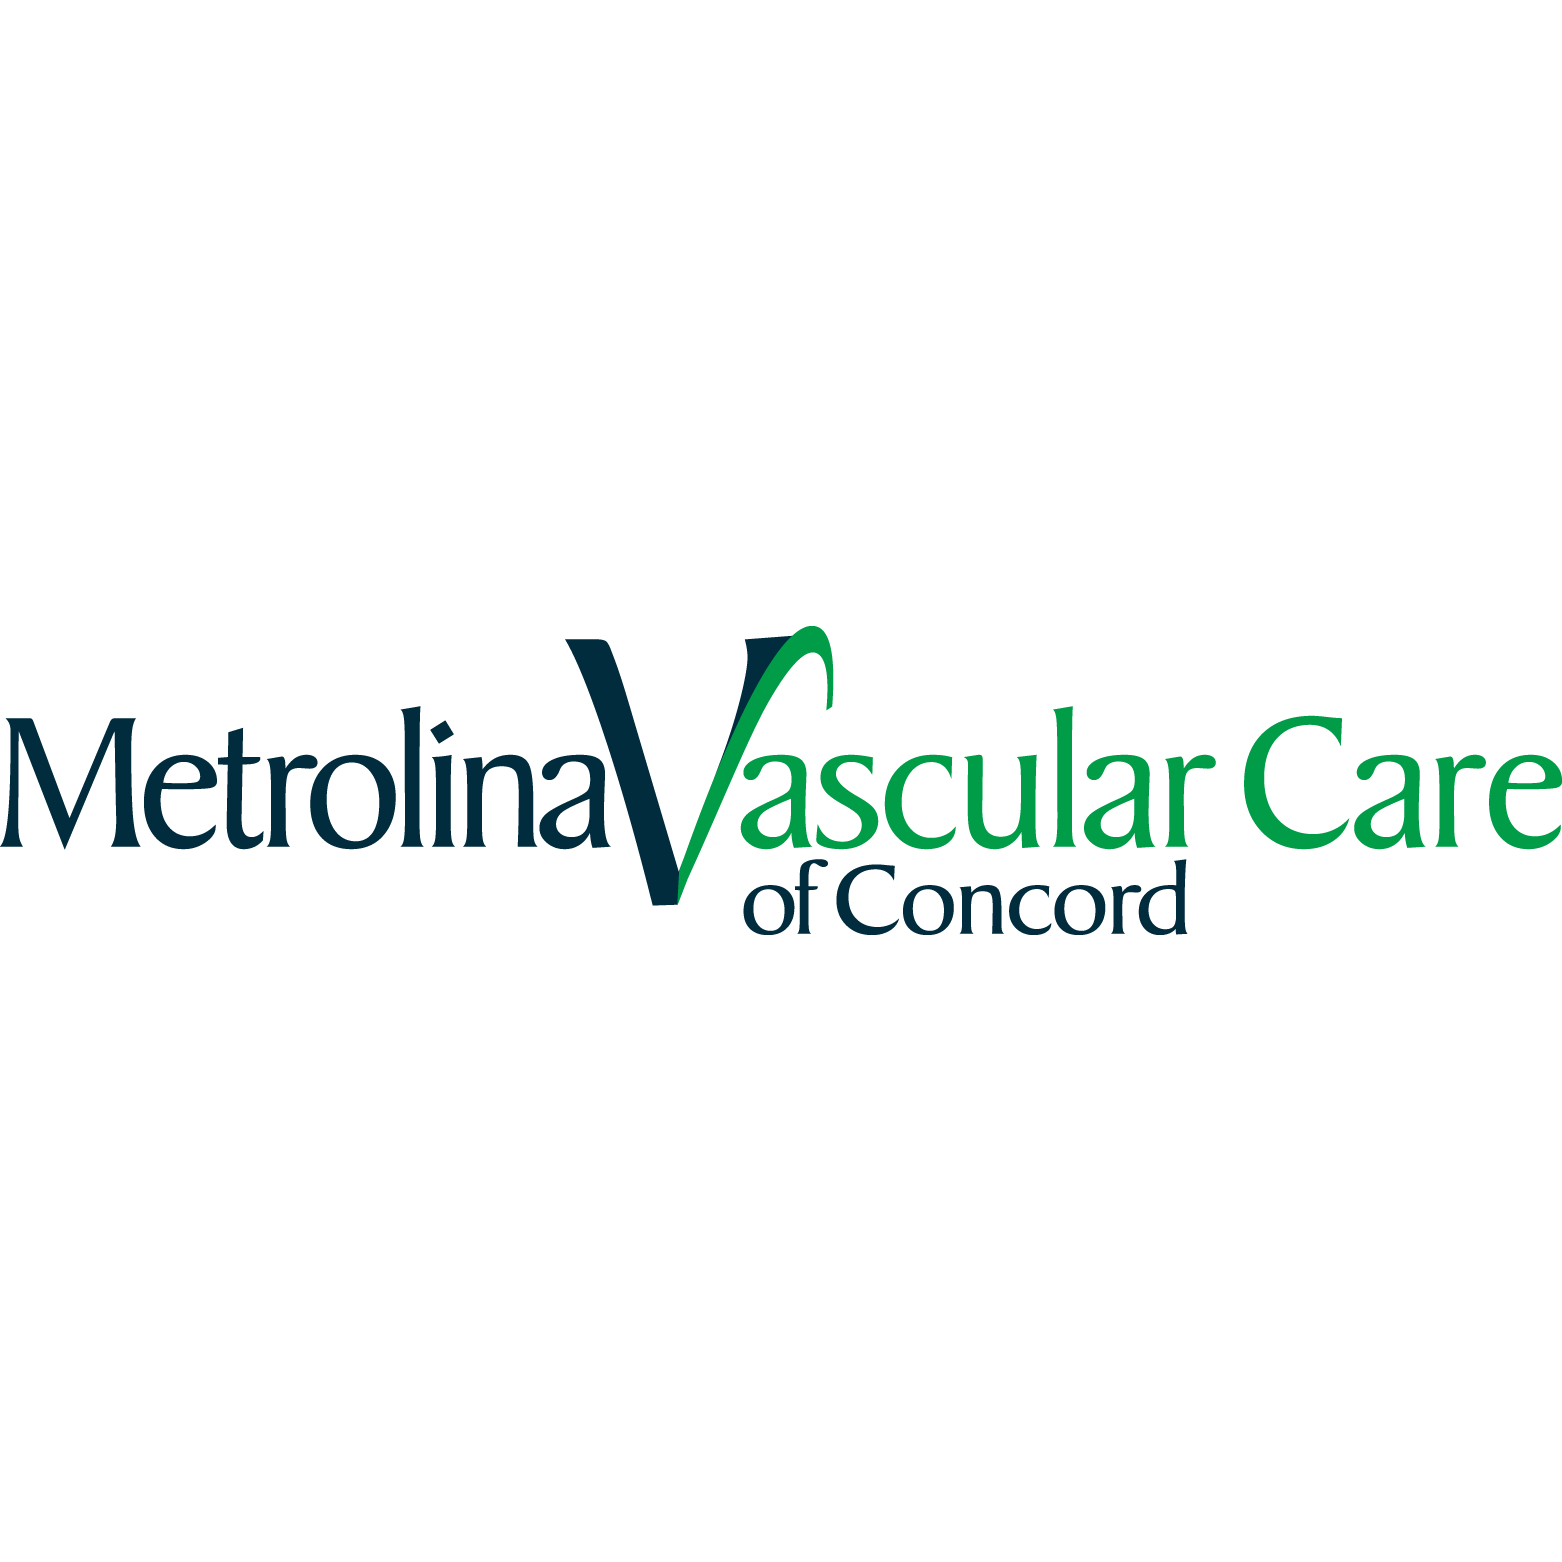 Metrolina Vascular Care of Concord